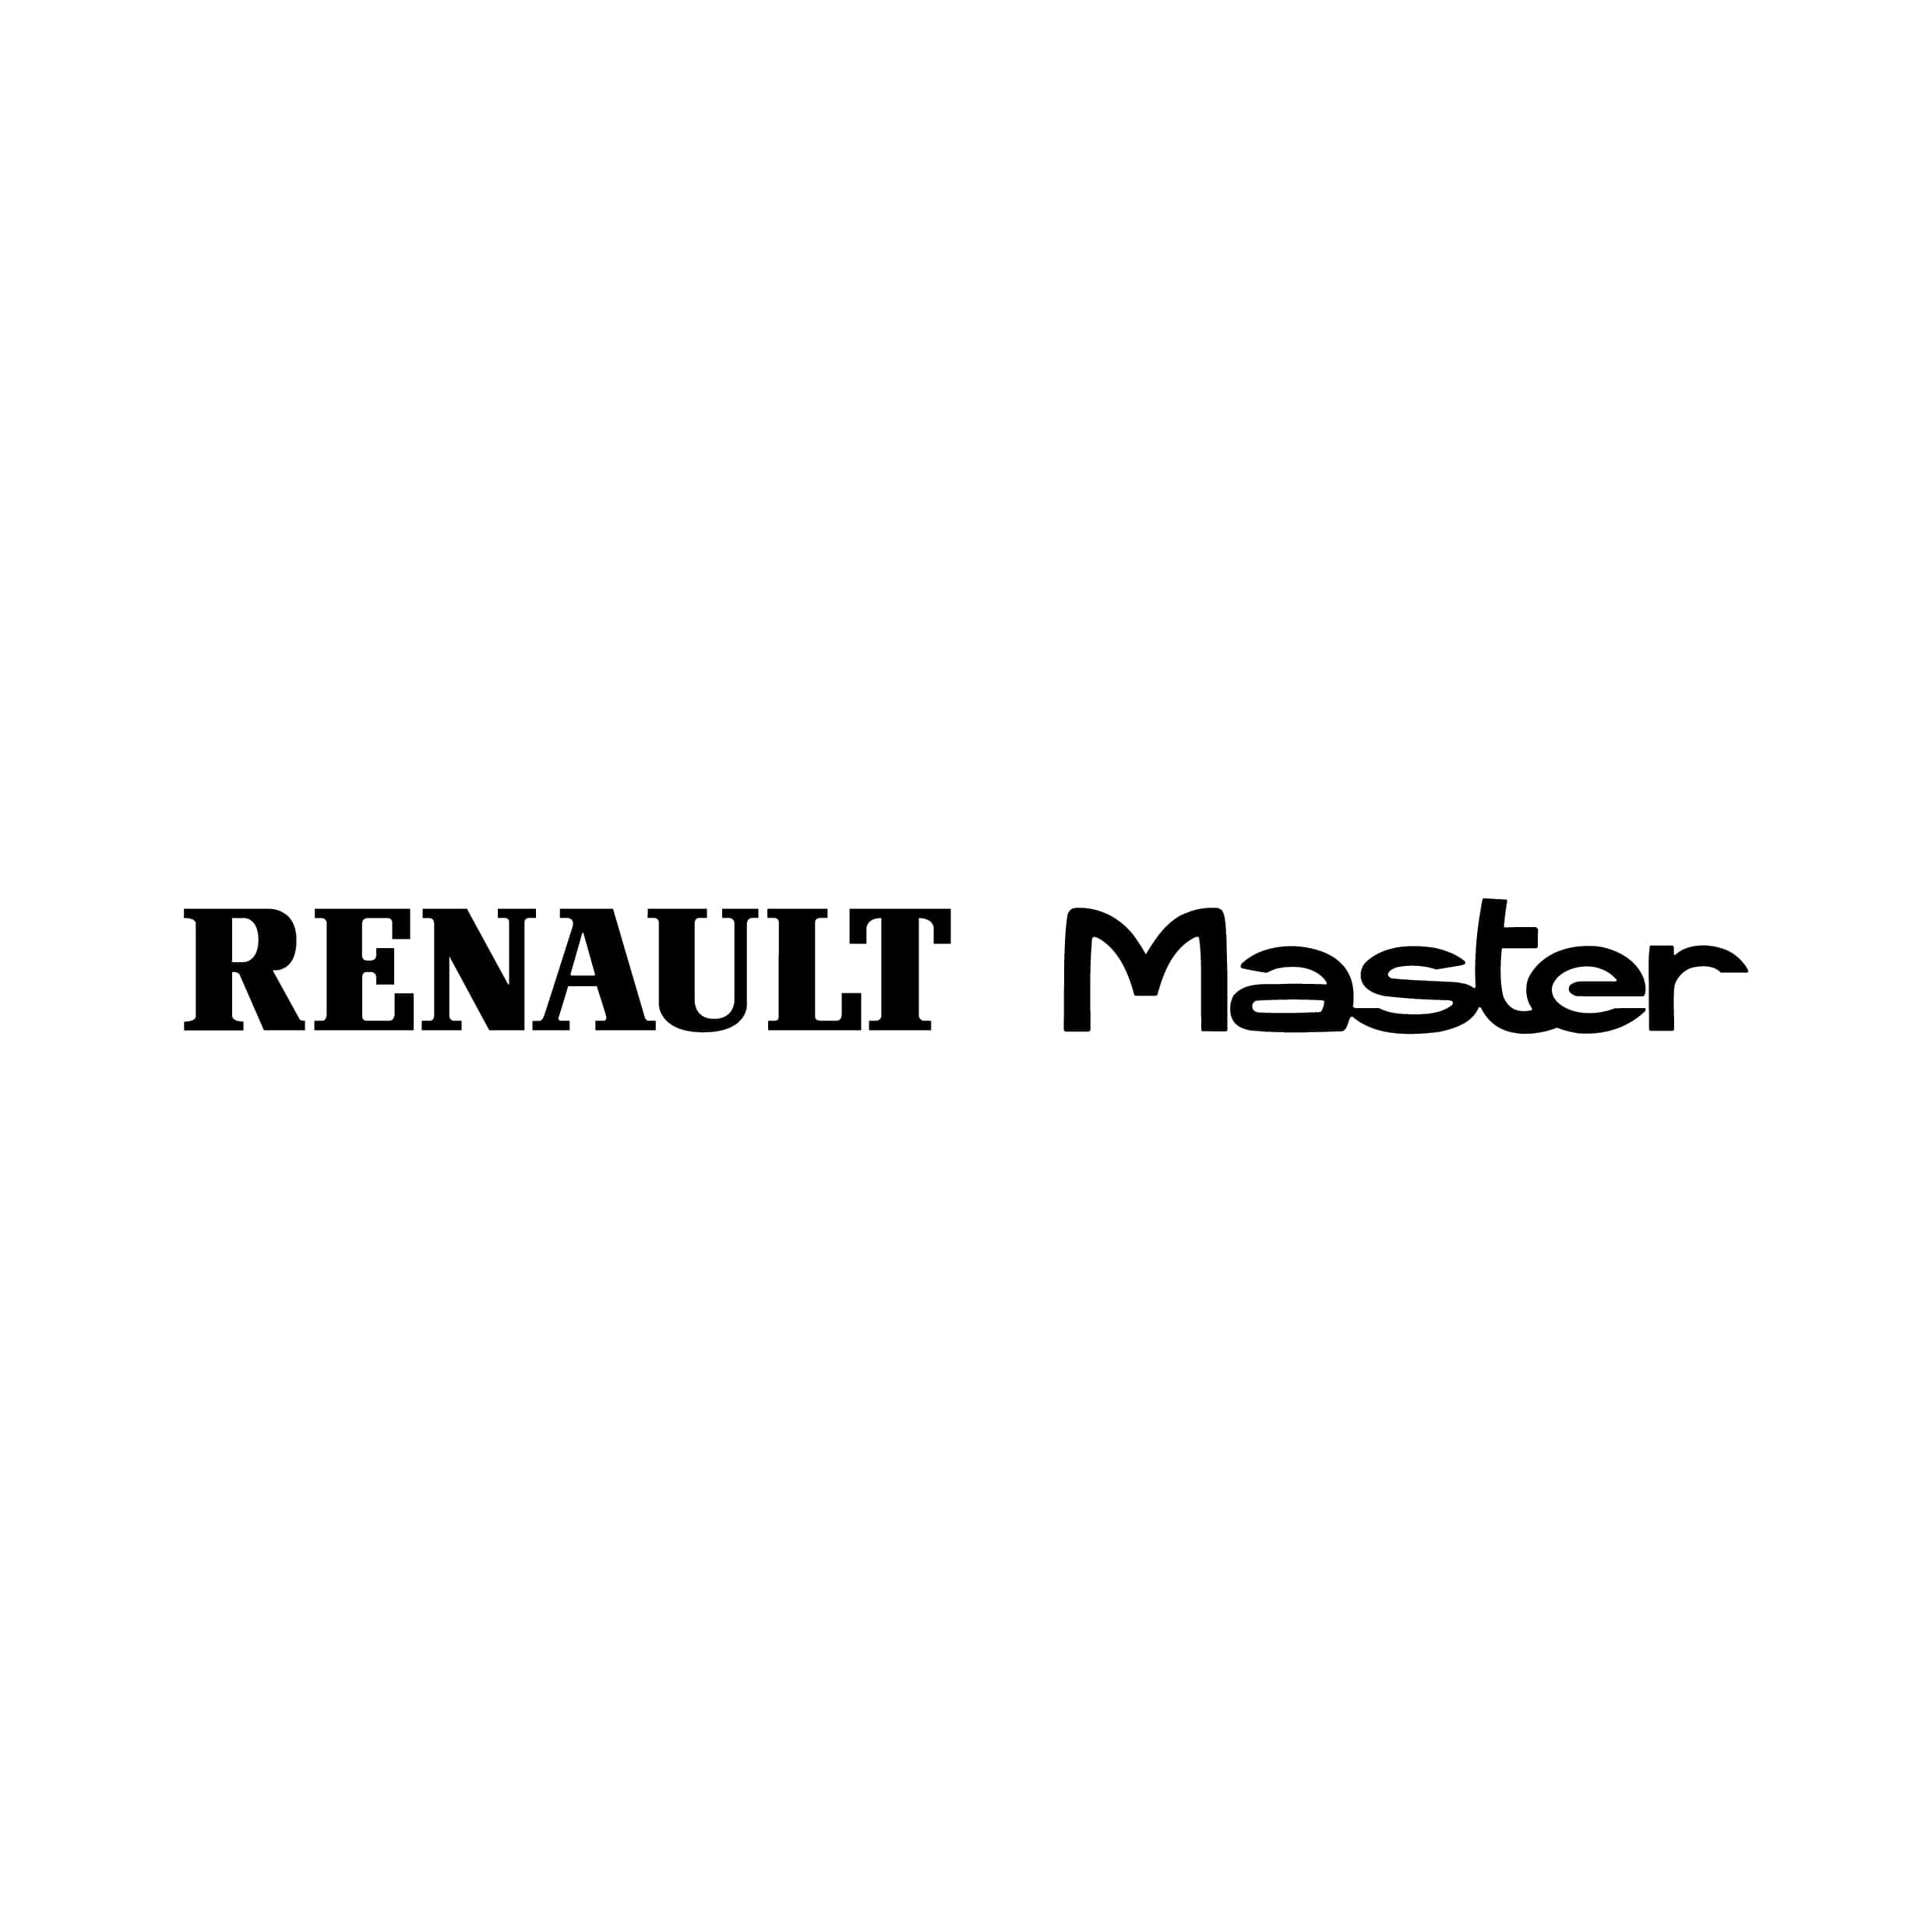 stickers-renault-master-ref131-autocollant-voiture-sticker-auto-autocollants-decals-sponsors-racing-tuning-sport-logo-min